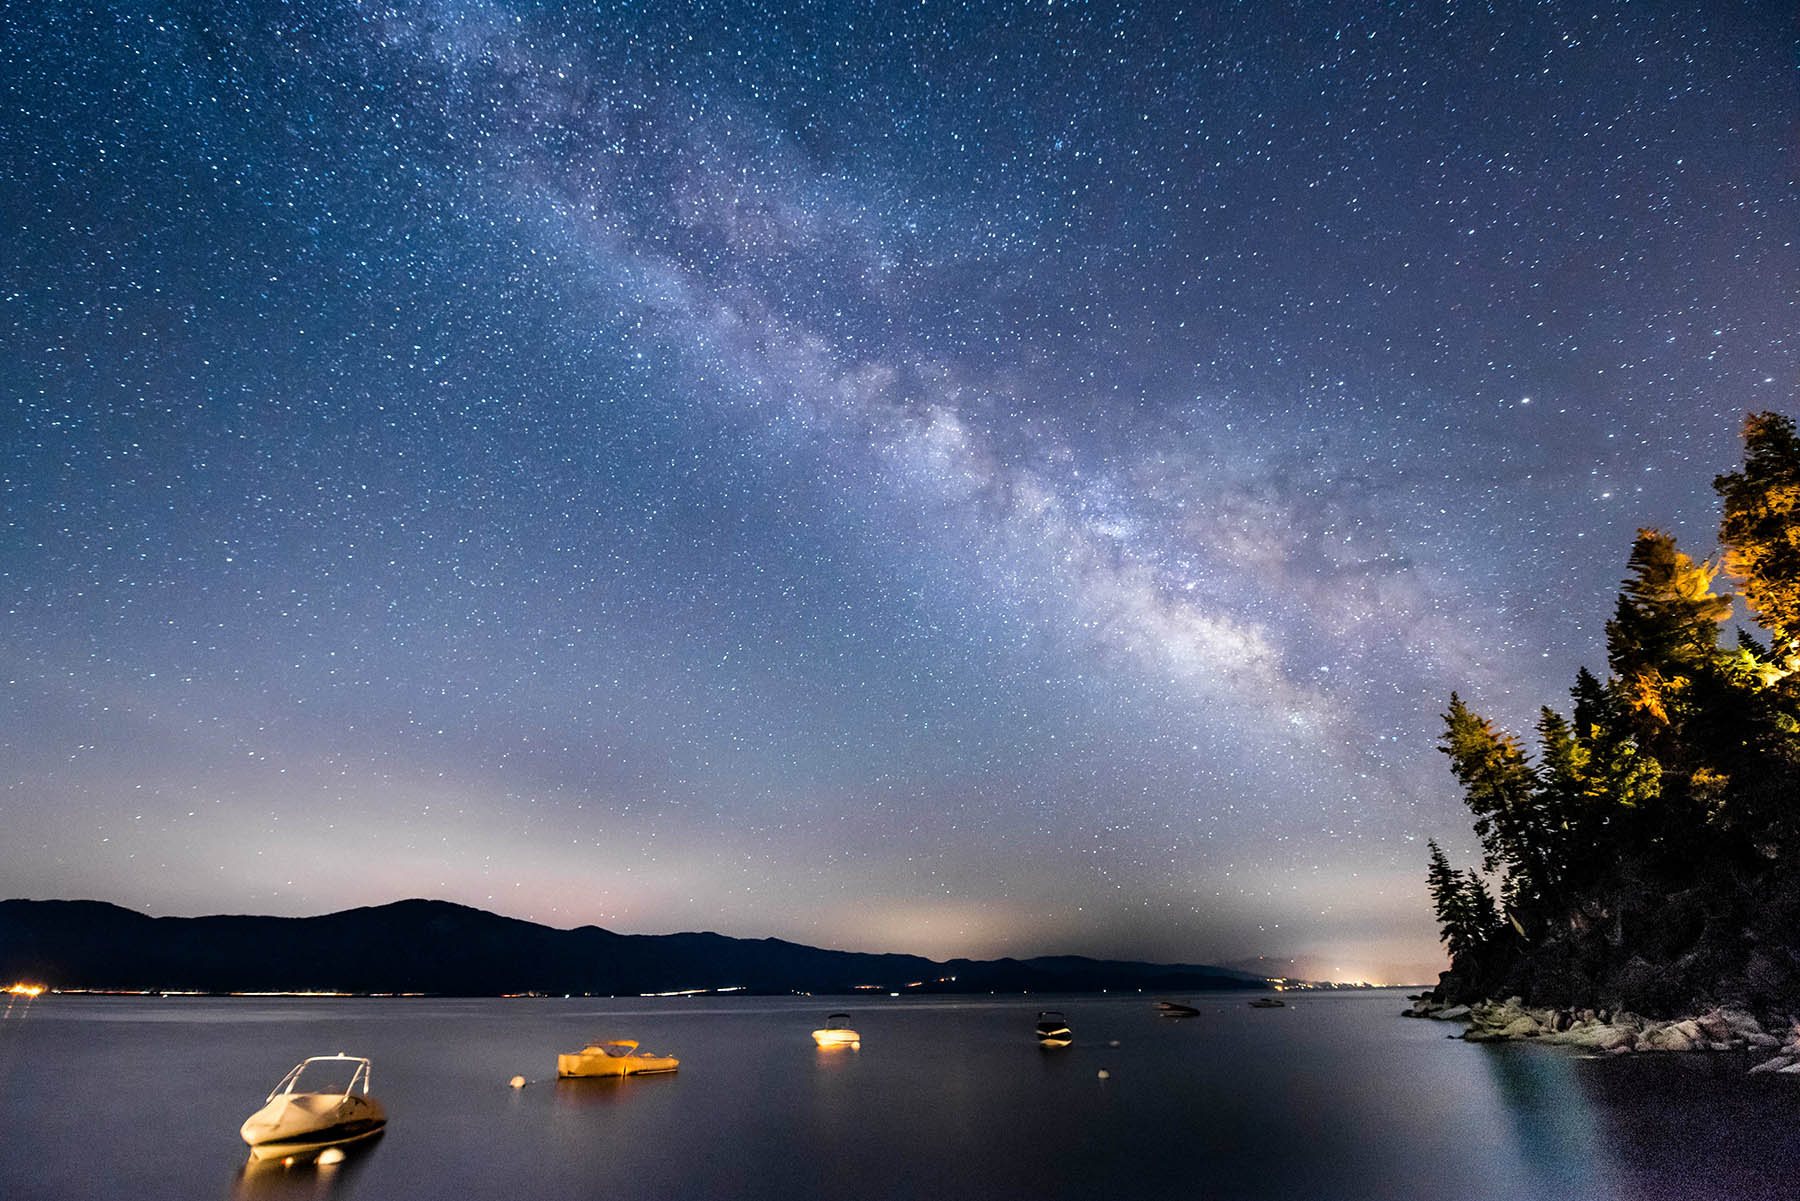 Enjoy Lake Tahoe - A Photographer’s Guide to Capturing Lake Tahoe’s Beauty